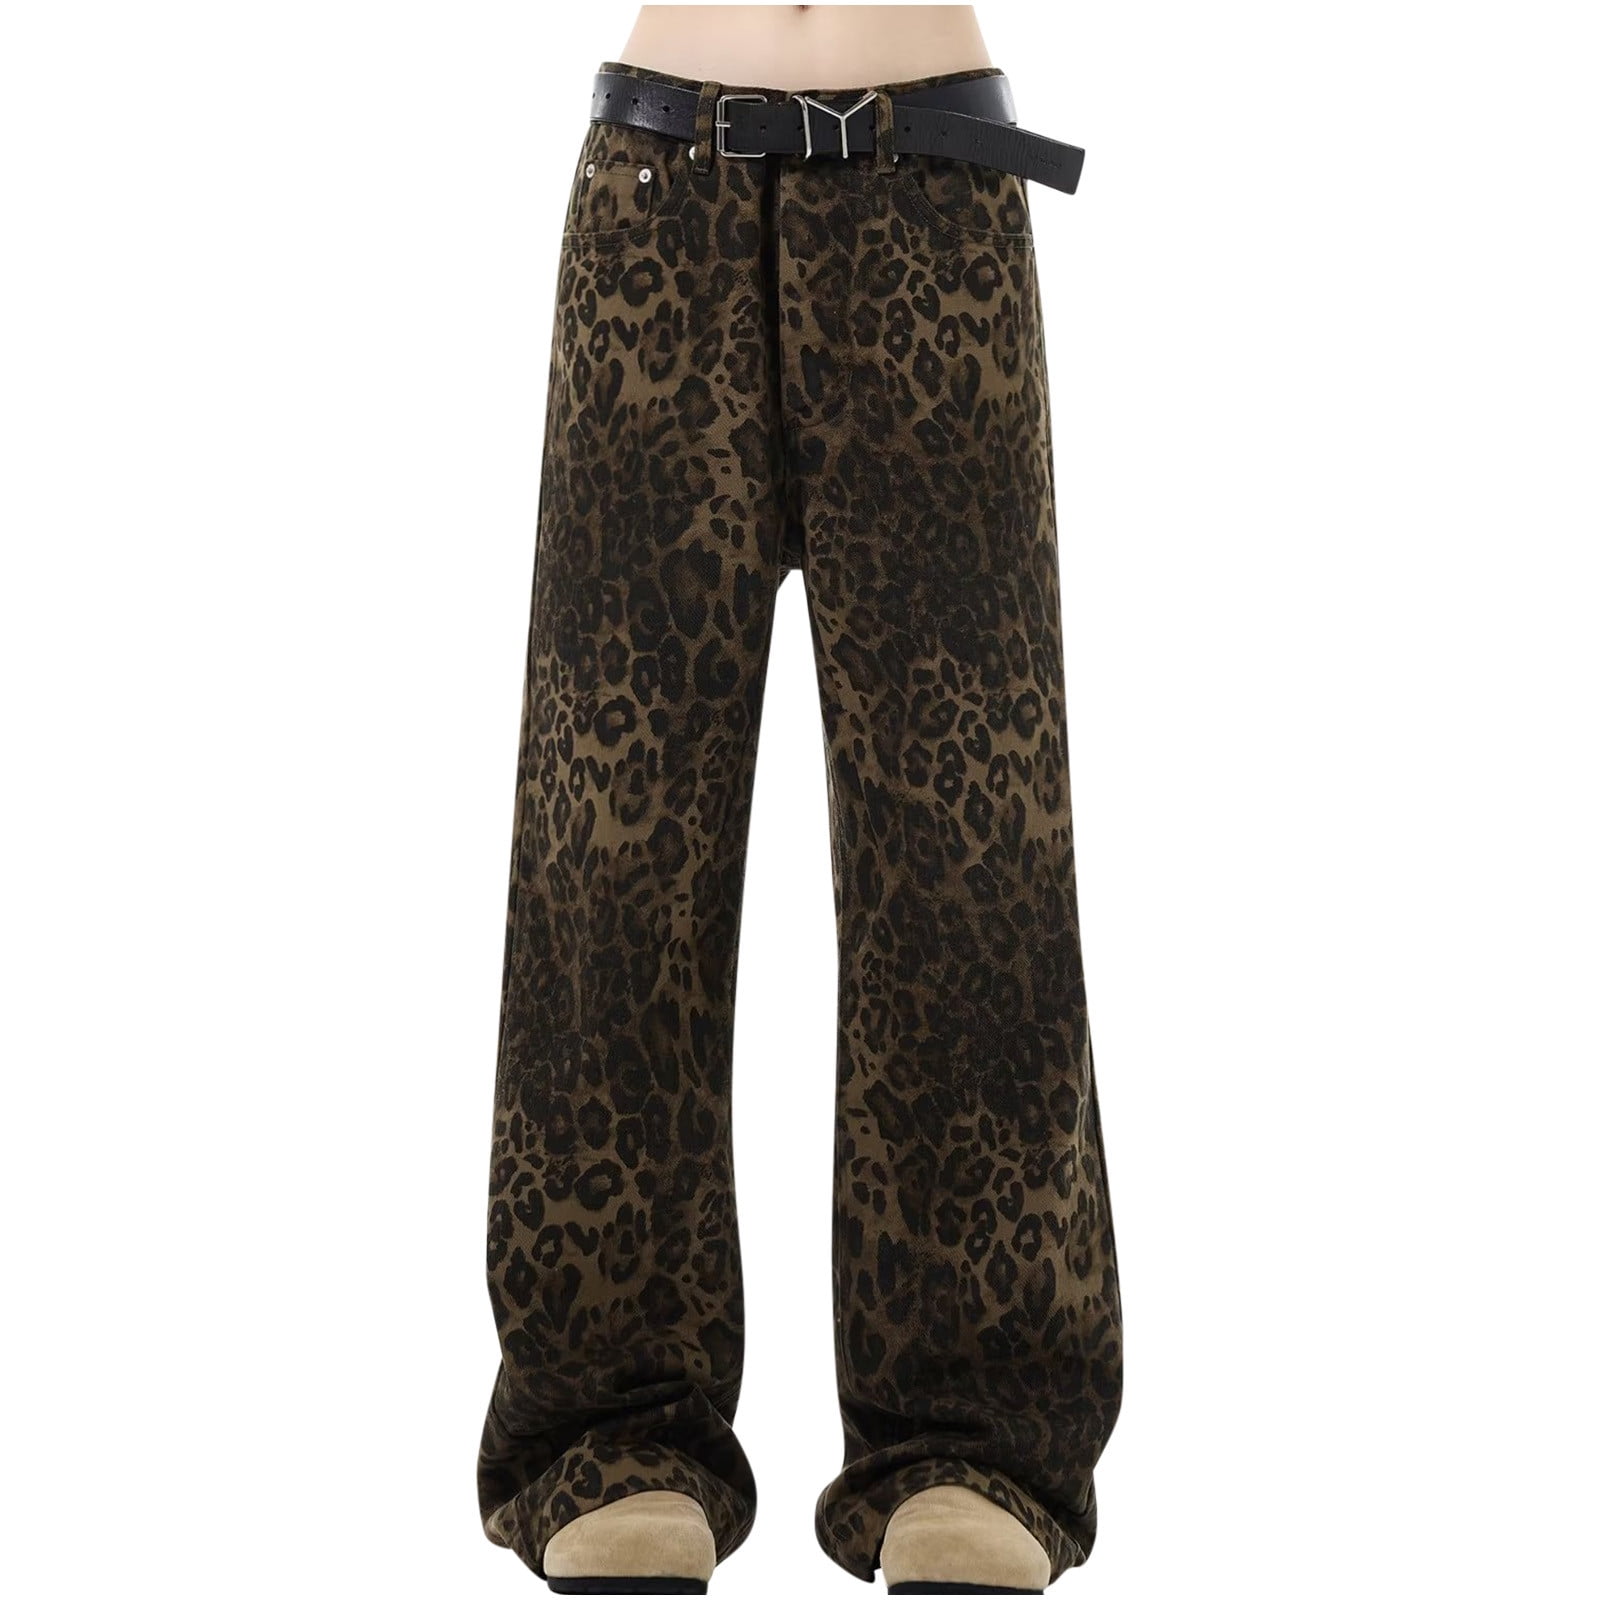 nhApmj Linen Maternity Pants Linen Pant Suits for Women Seamless Yoga ...